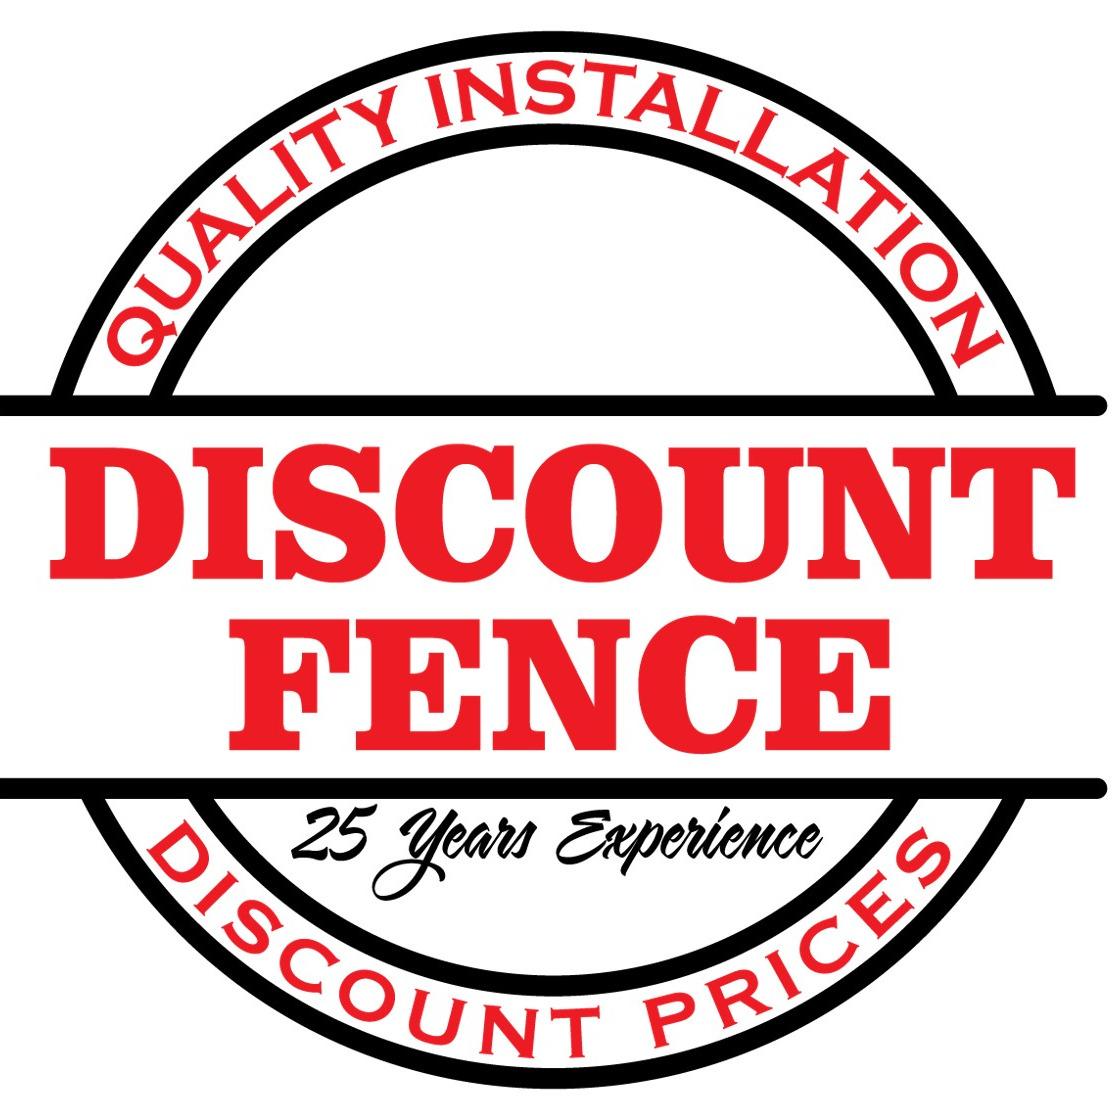 Discount Fence Inc Logo